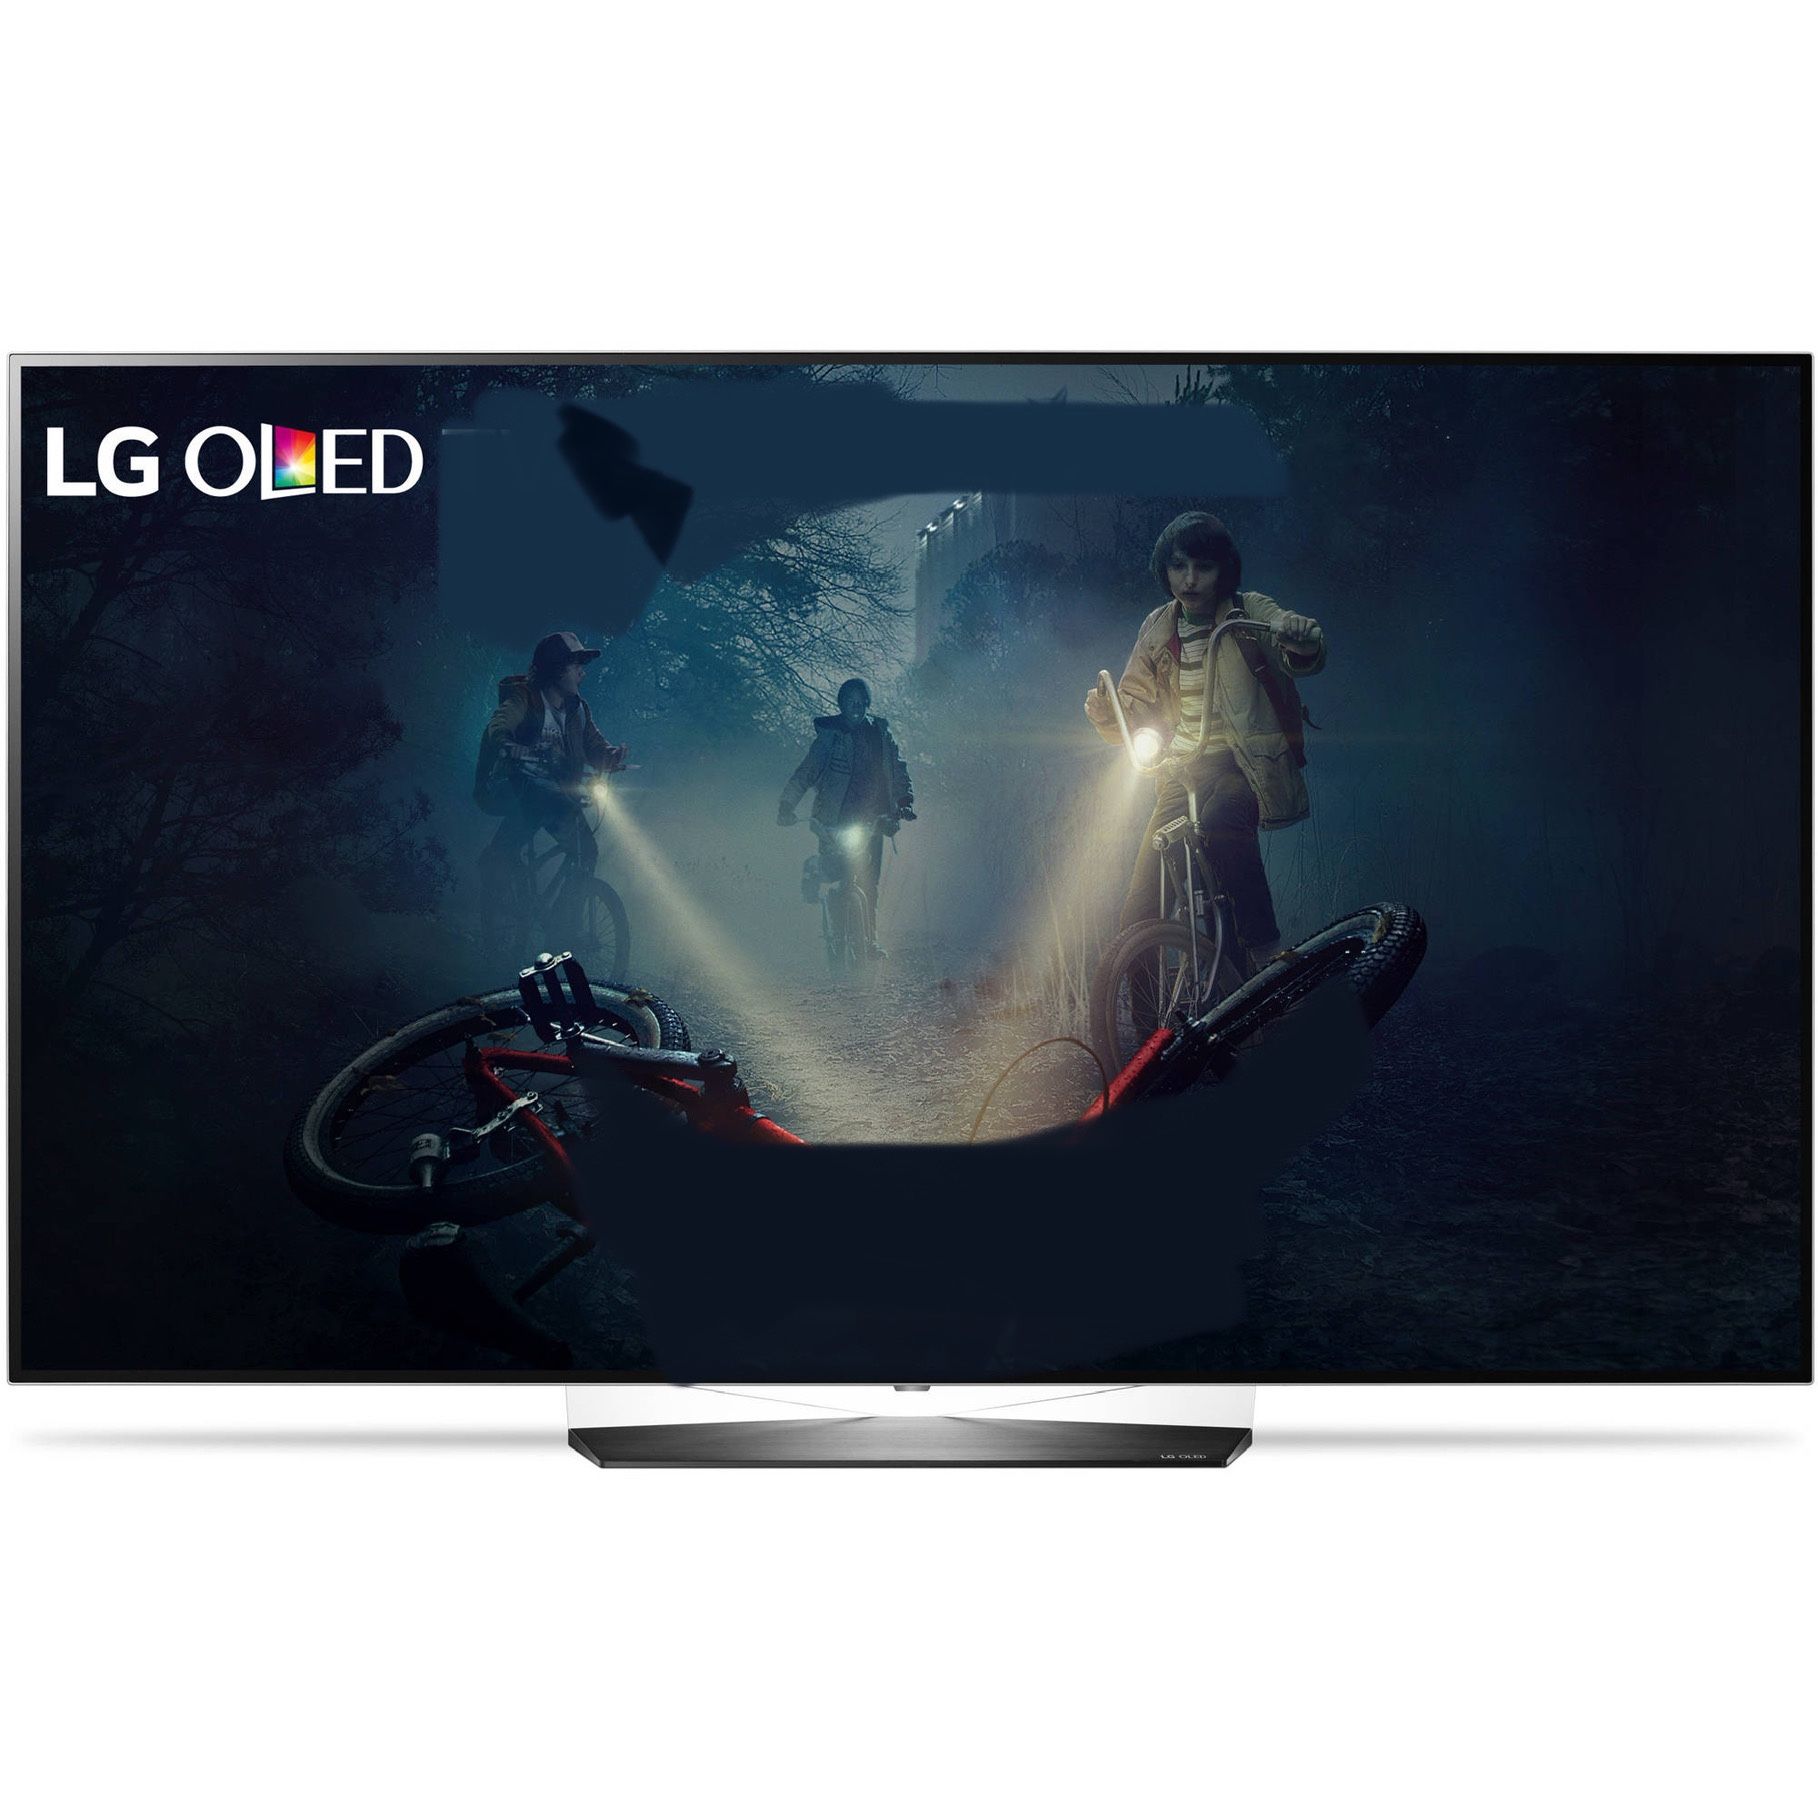 LG 55” OLED 4K Smart TV HDR - Excellent Condition